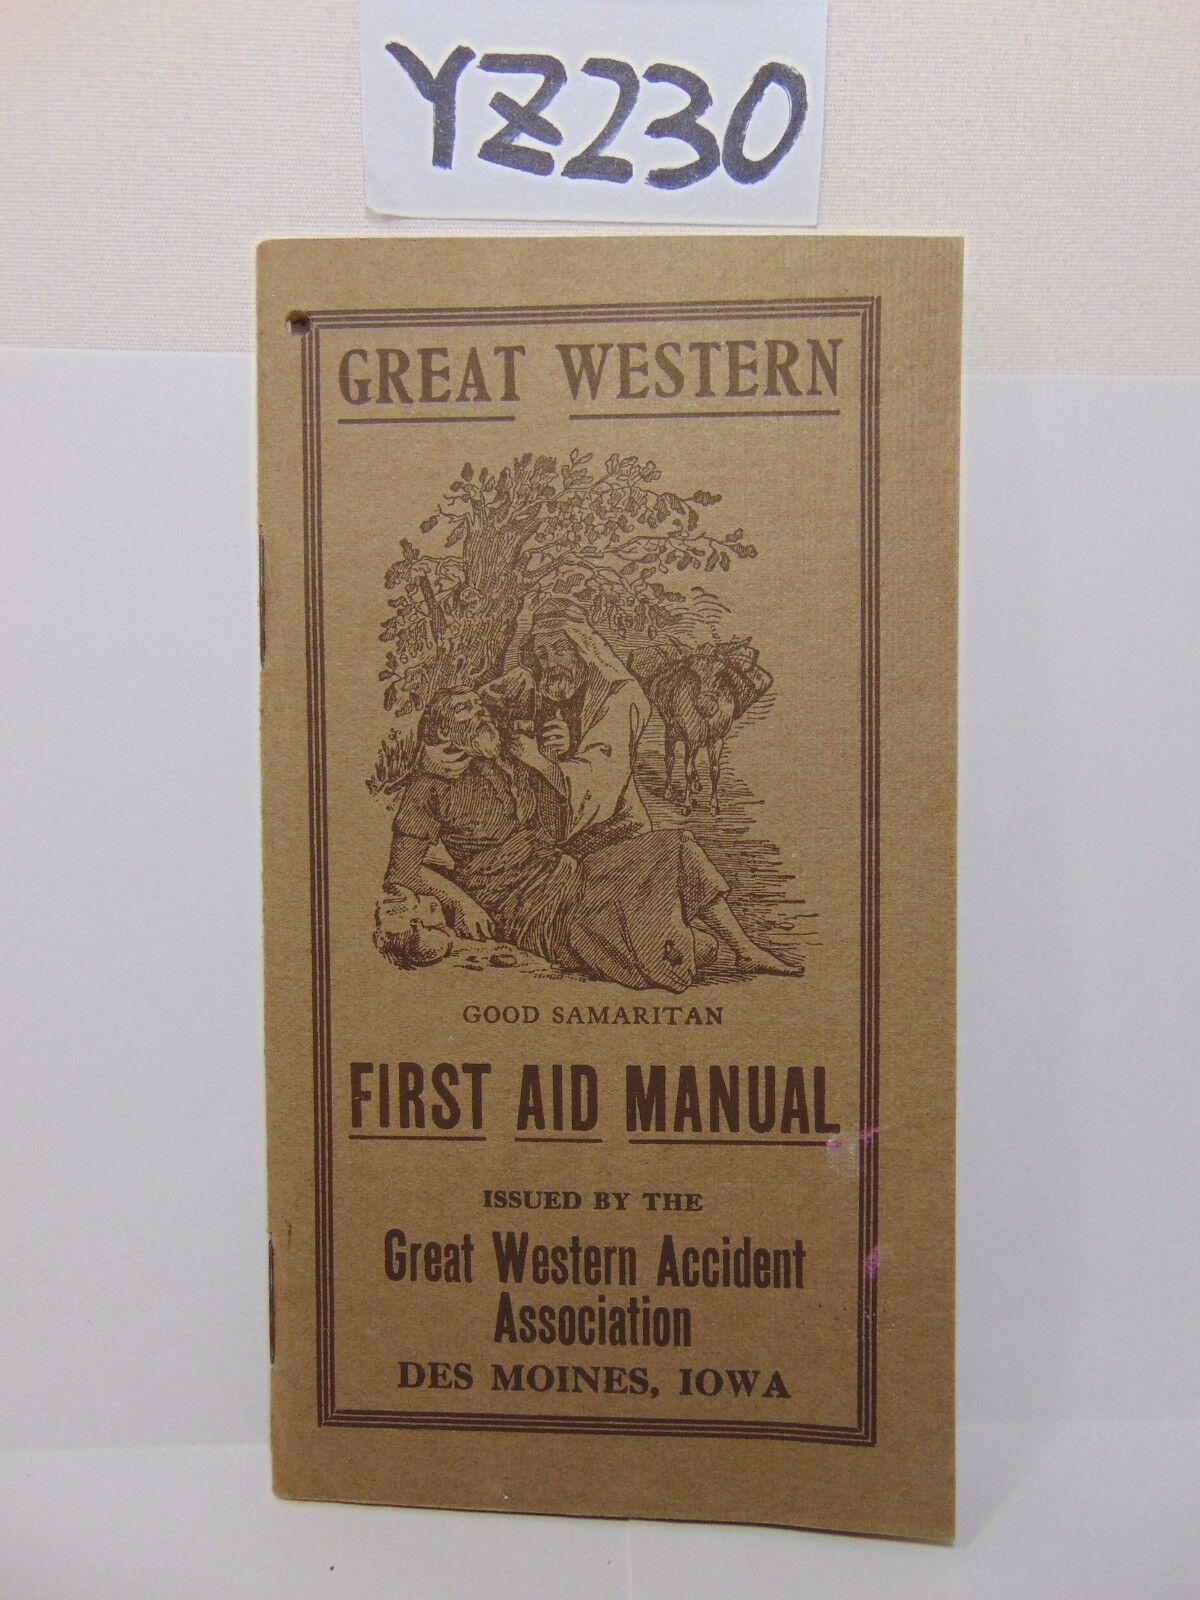 VINTAGE 1913 GREAT WESTERN INSURANCE FIRST AID MANUAL ADVERTISING GOOD SAMARITON